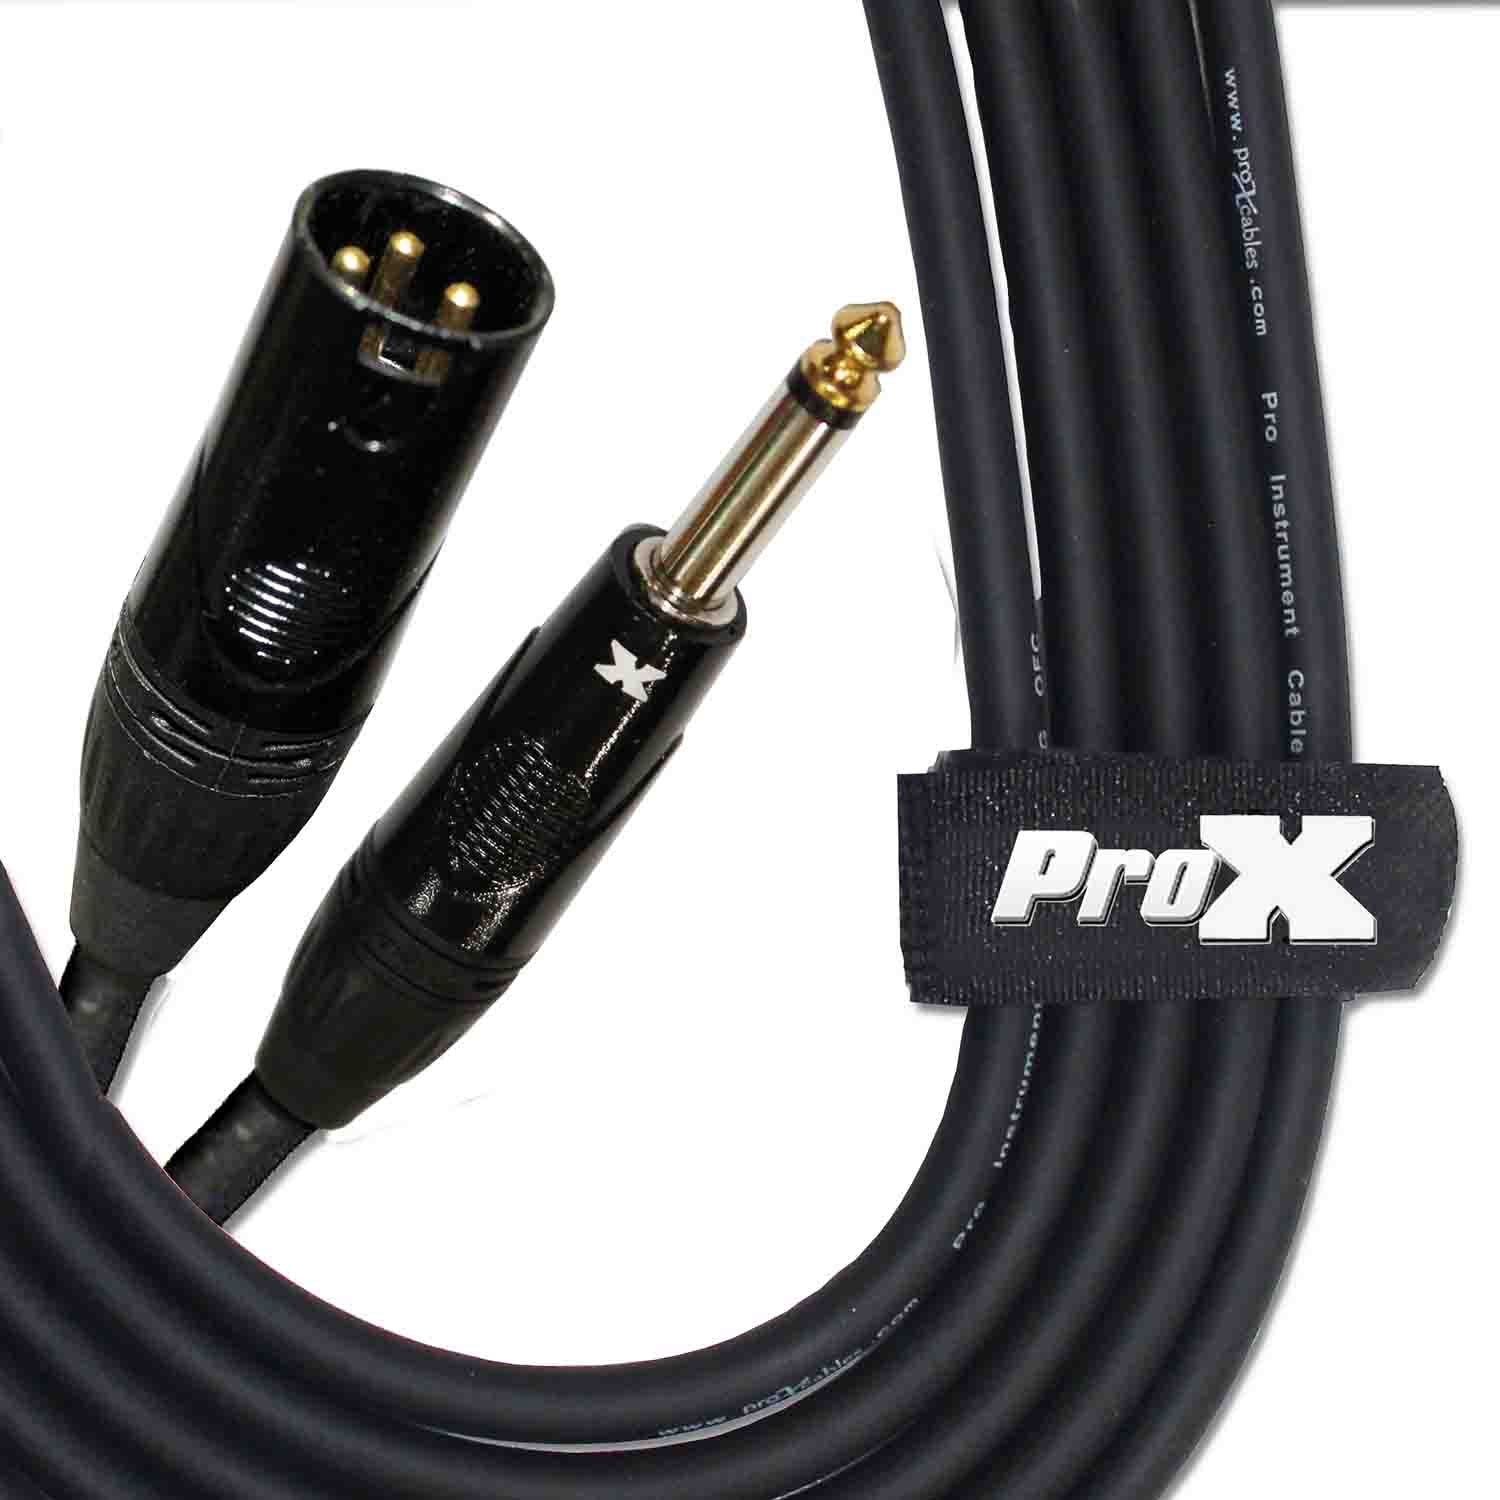 Prox XC-PXM10 Unbalanced 1/4" TS-M to XLR3-M High Performance Audio Cable - 10 Feet - Hollywood DJ